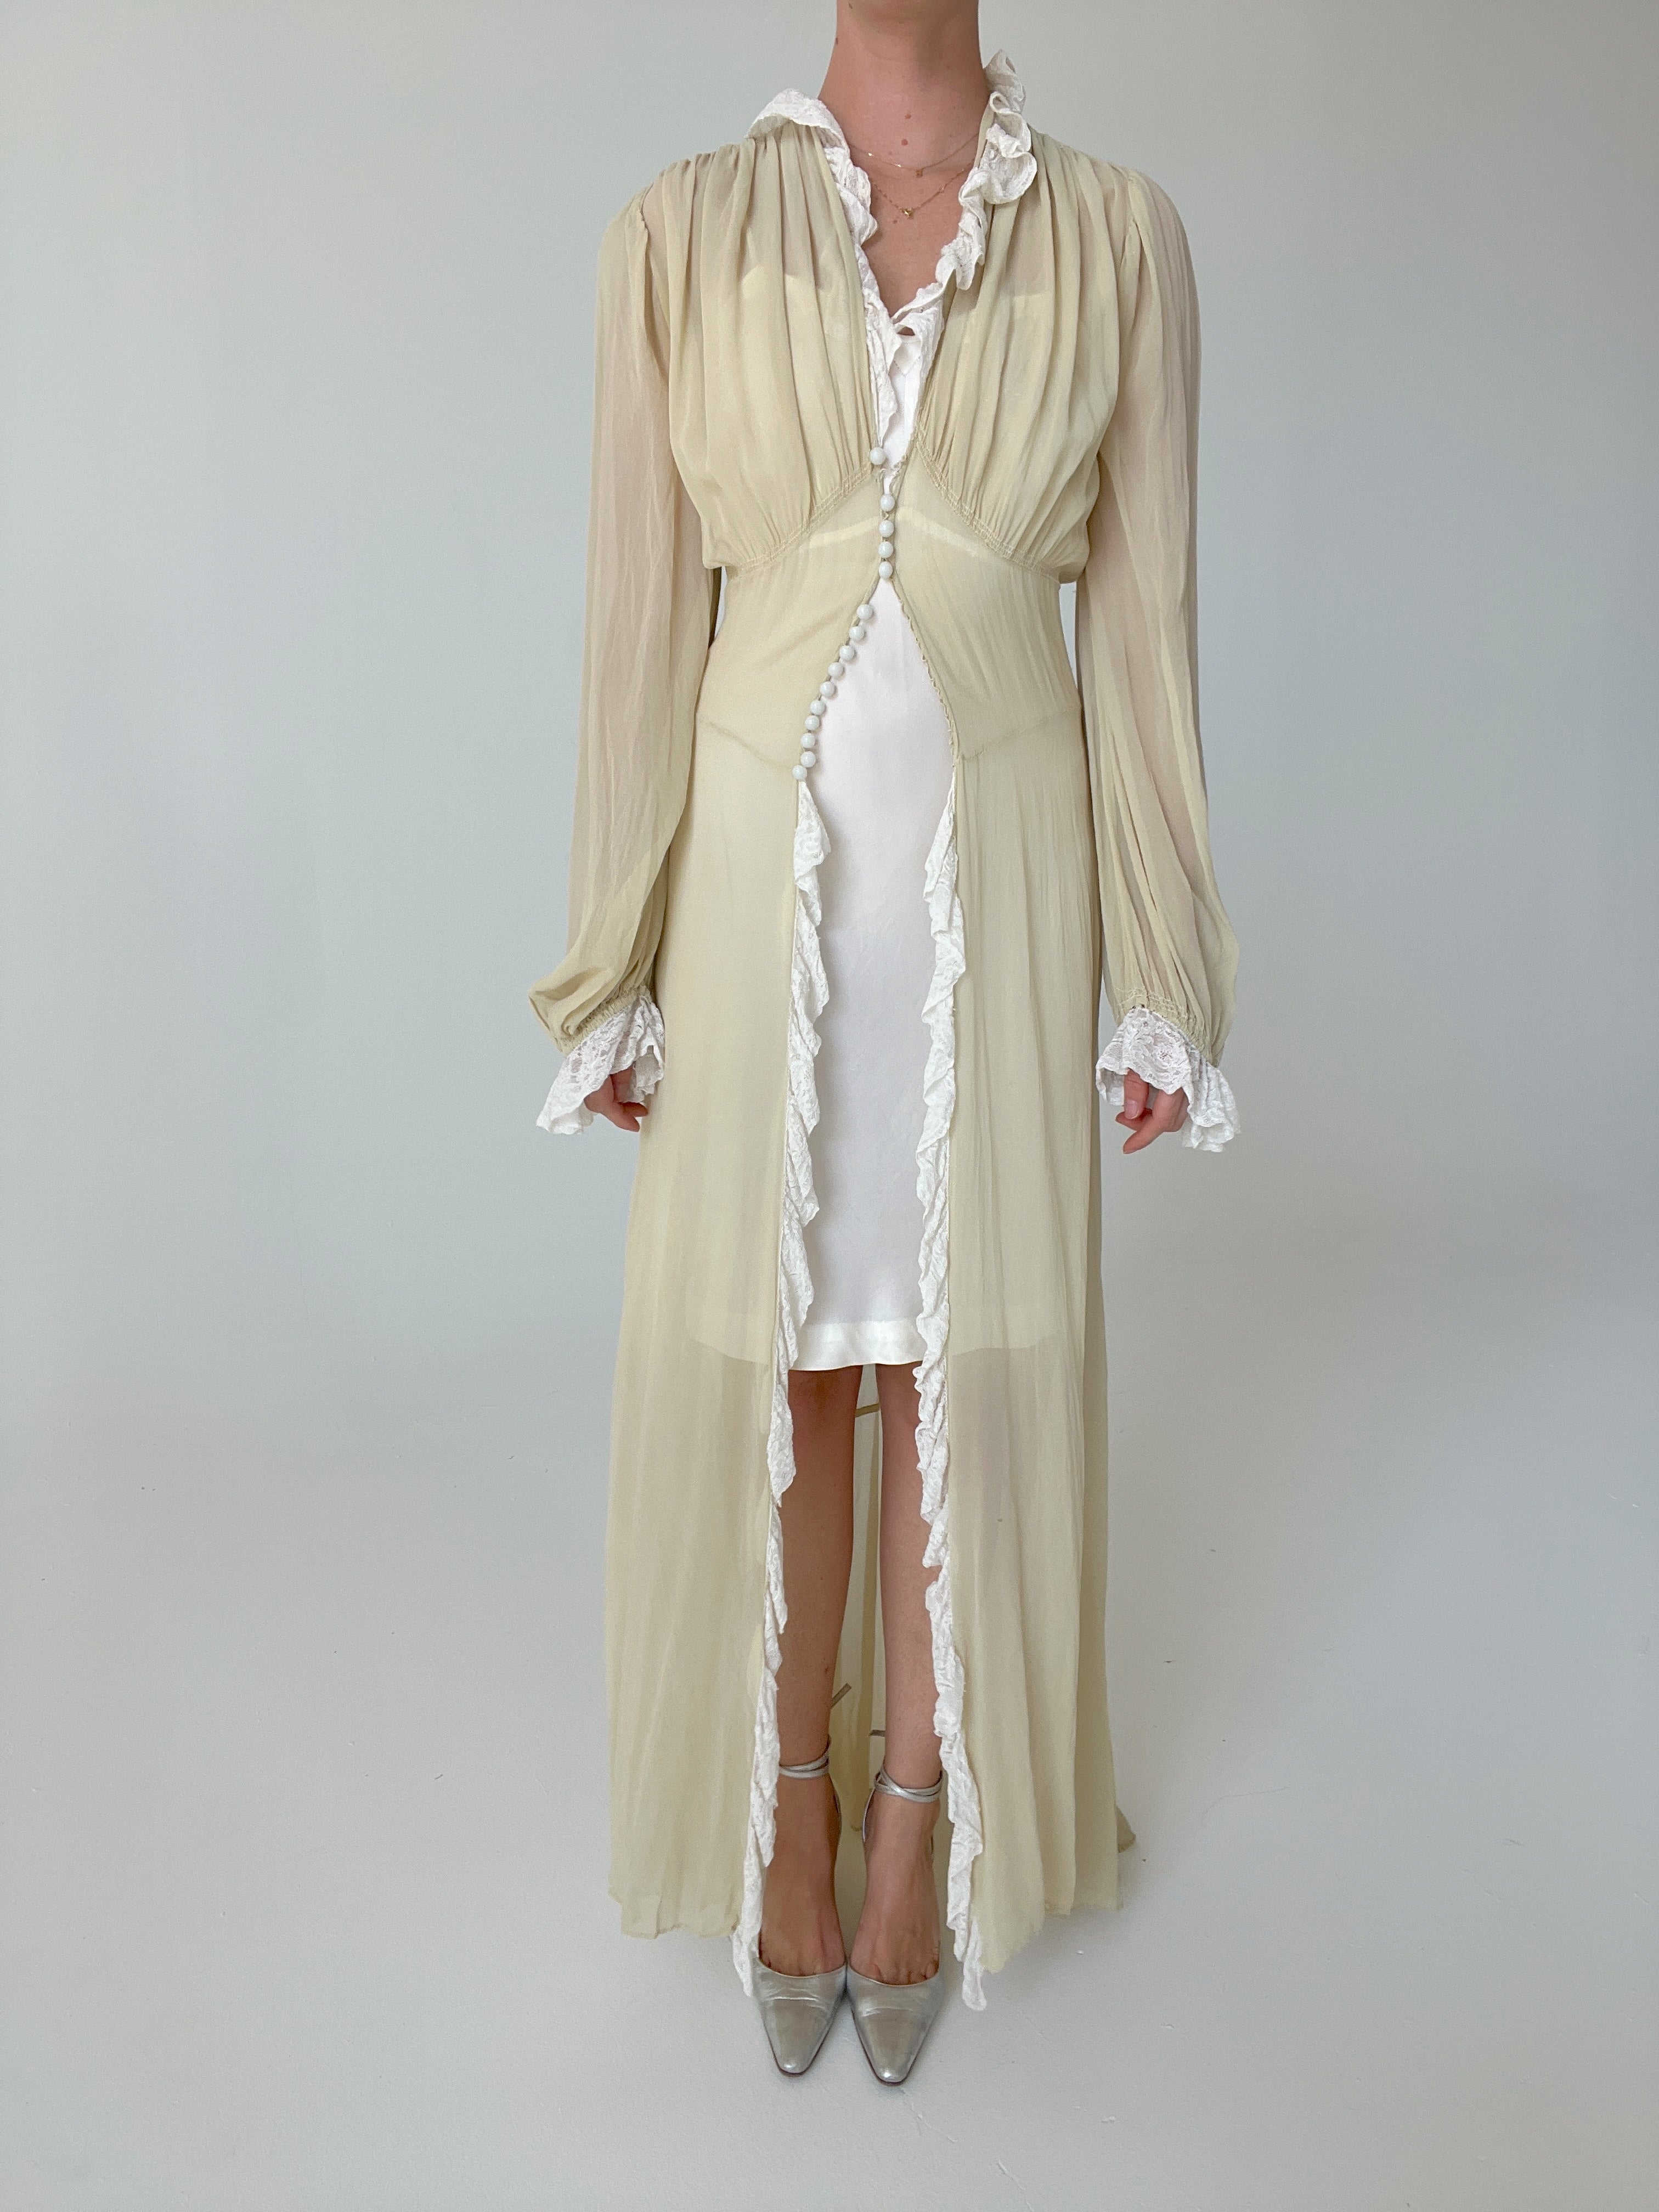 1930's Pale Vintage Cream Silk Chiffon Robe with White Lace